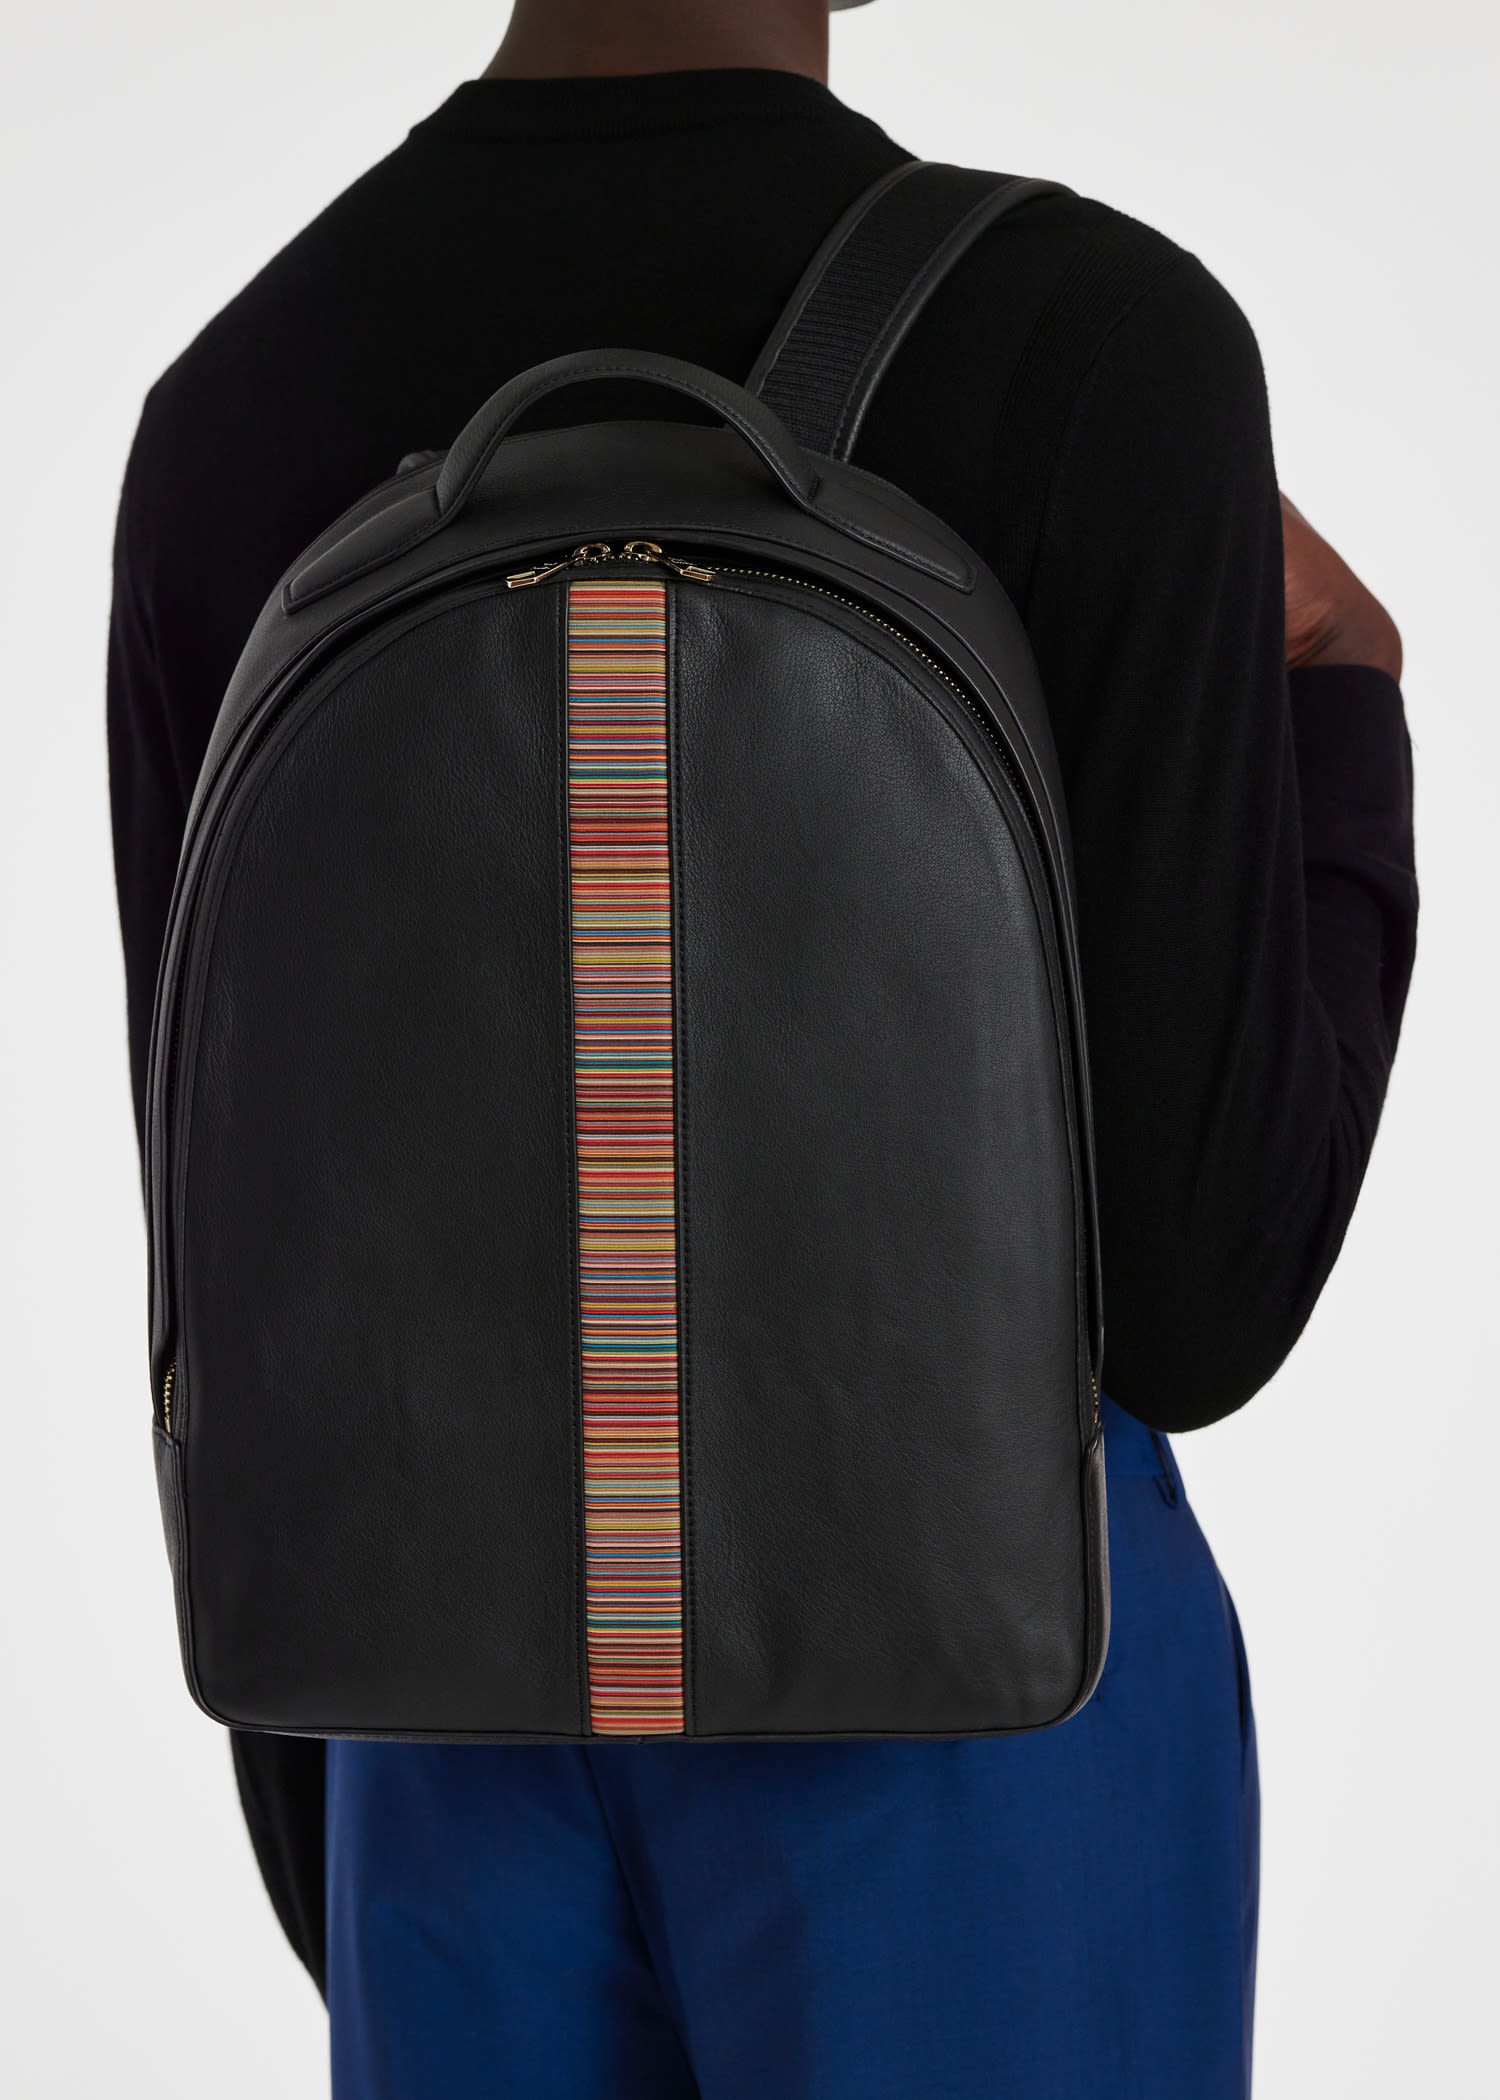 Paul Smith Grey Signature Stripe Travel Backpack Paul Smith